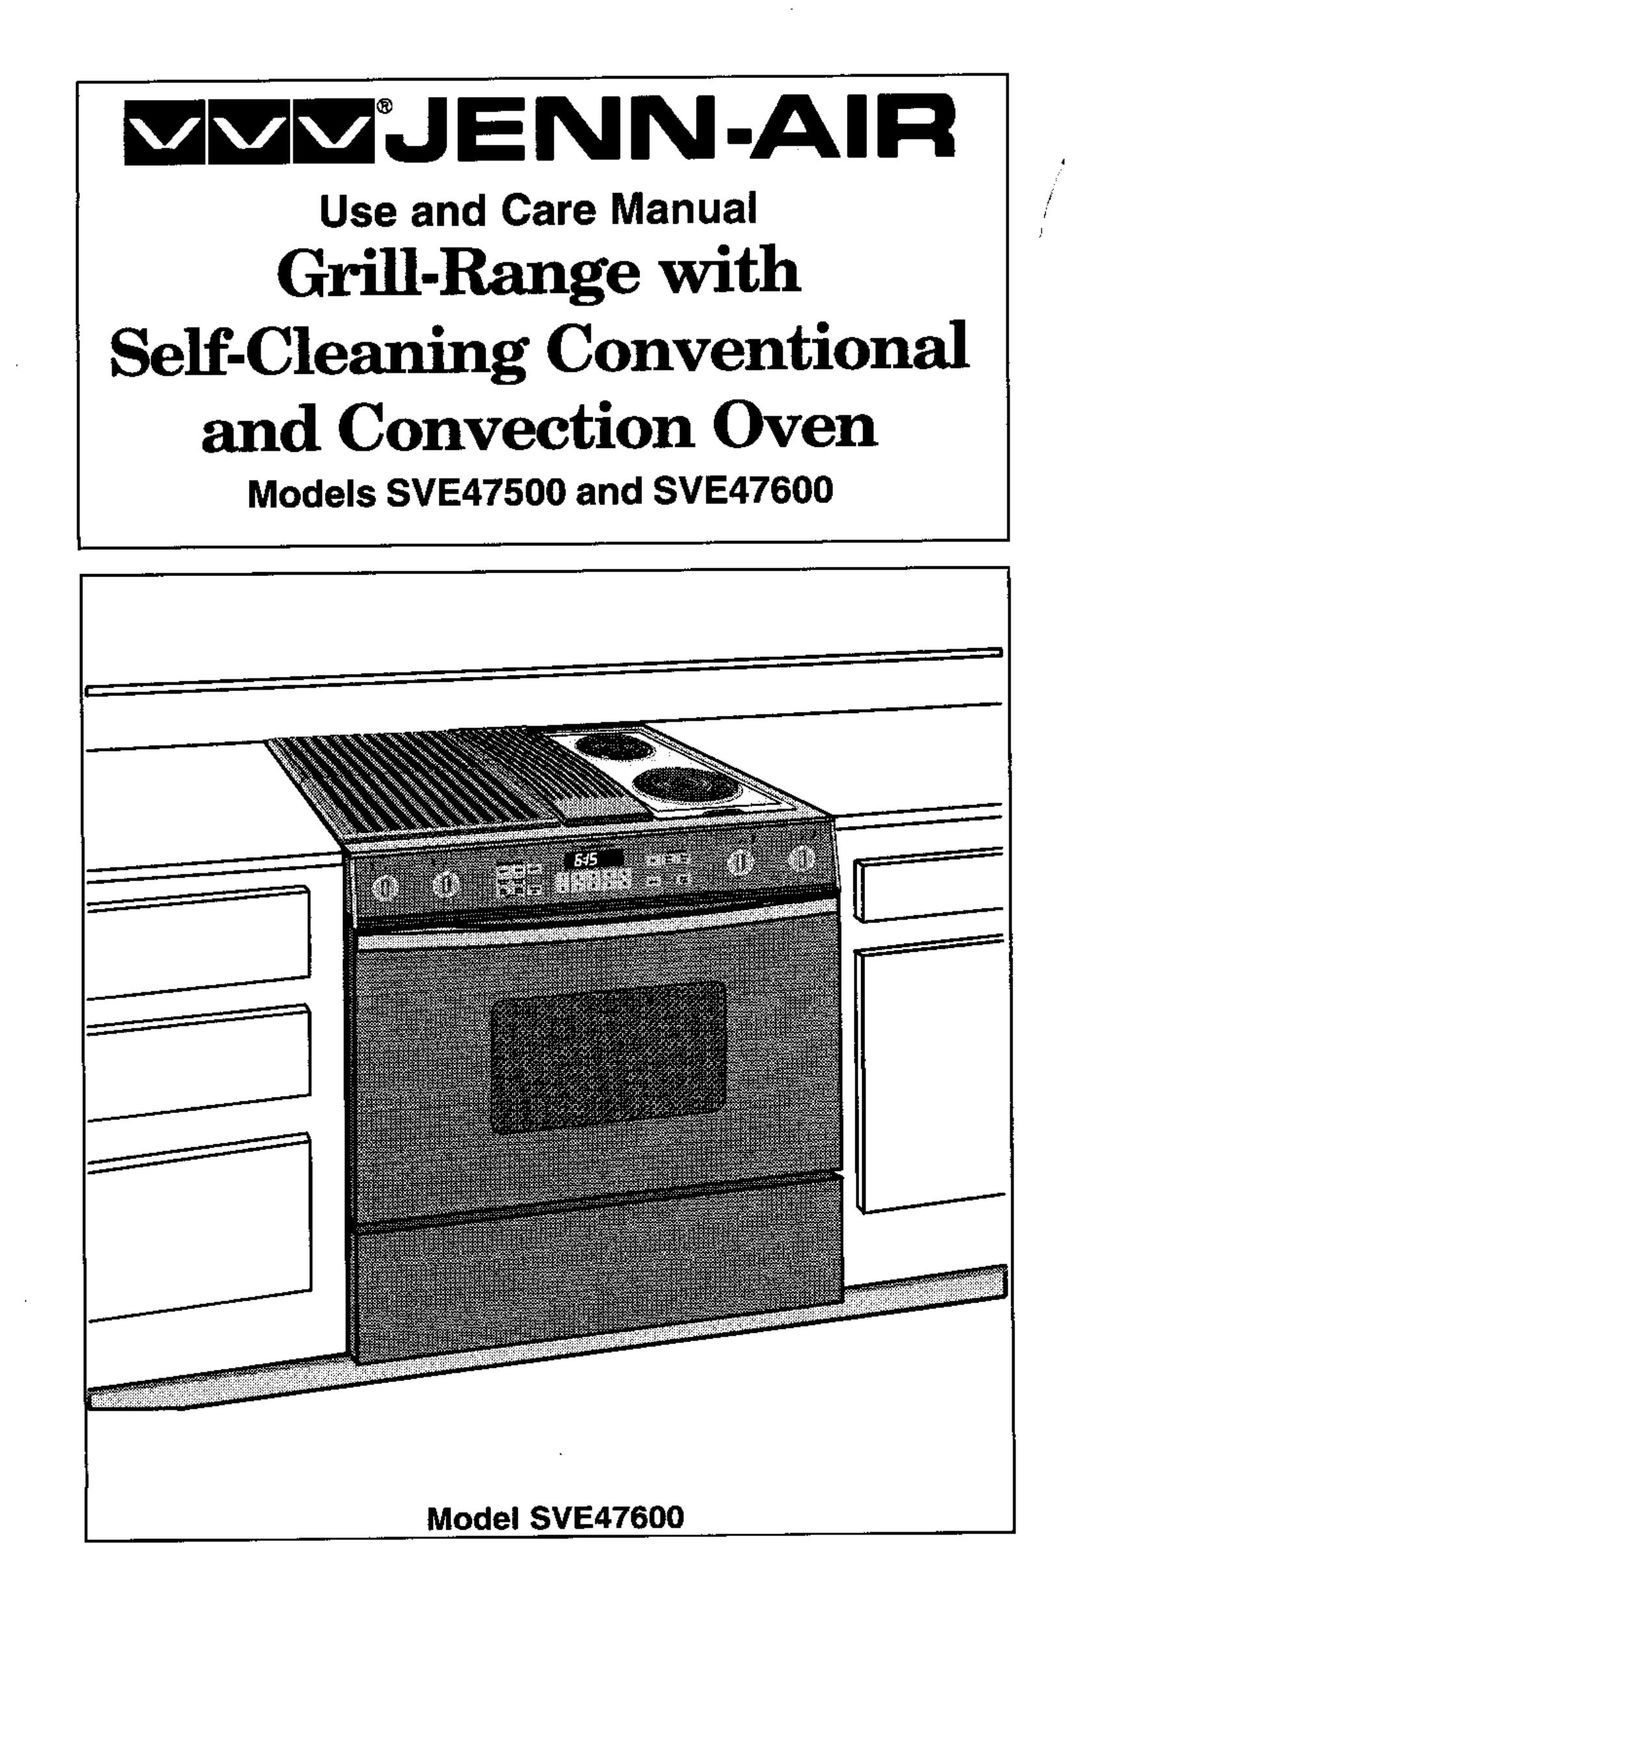 Jenn-Air SVE47500 Convection Oven User Manual